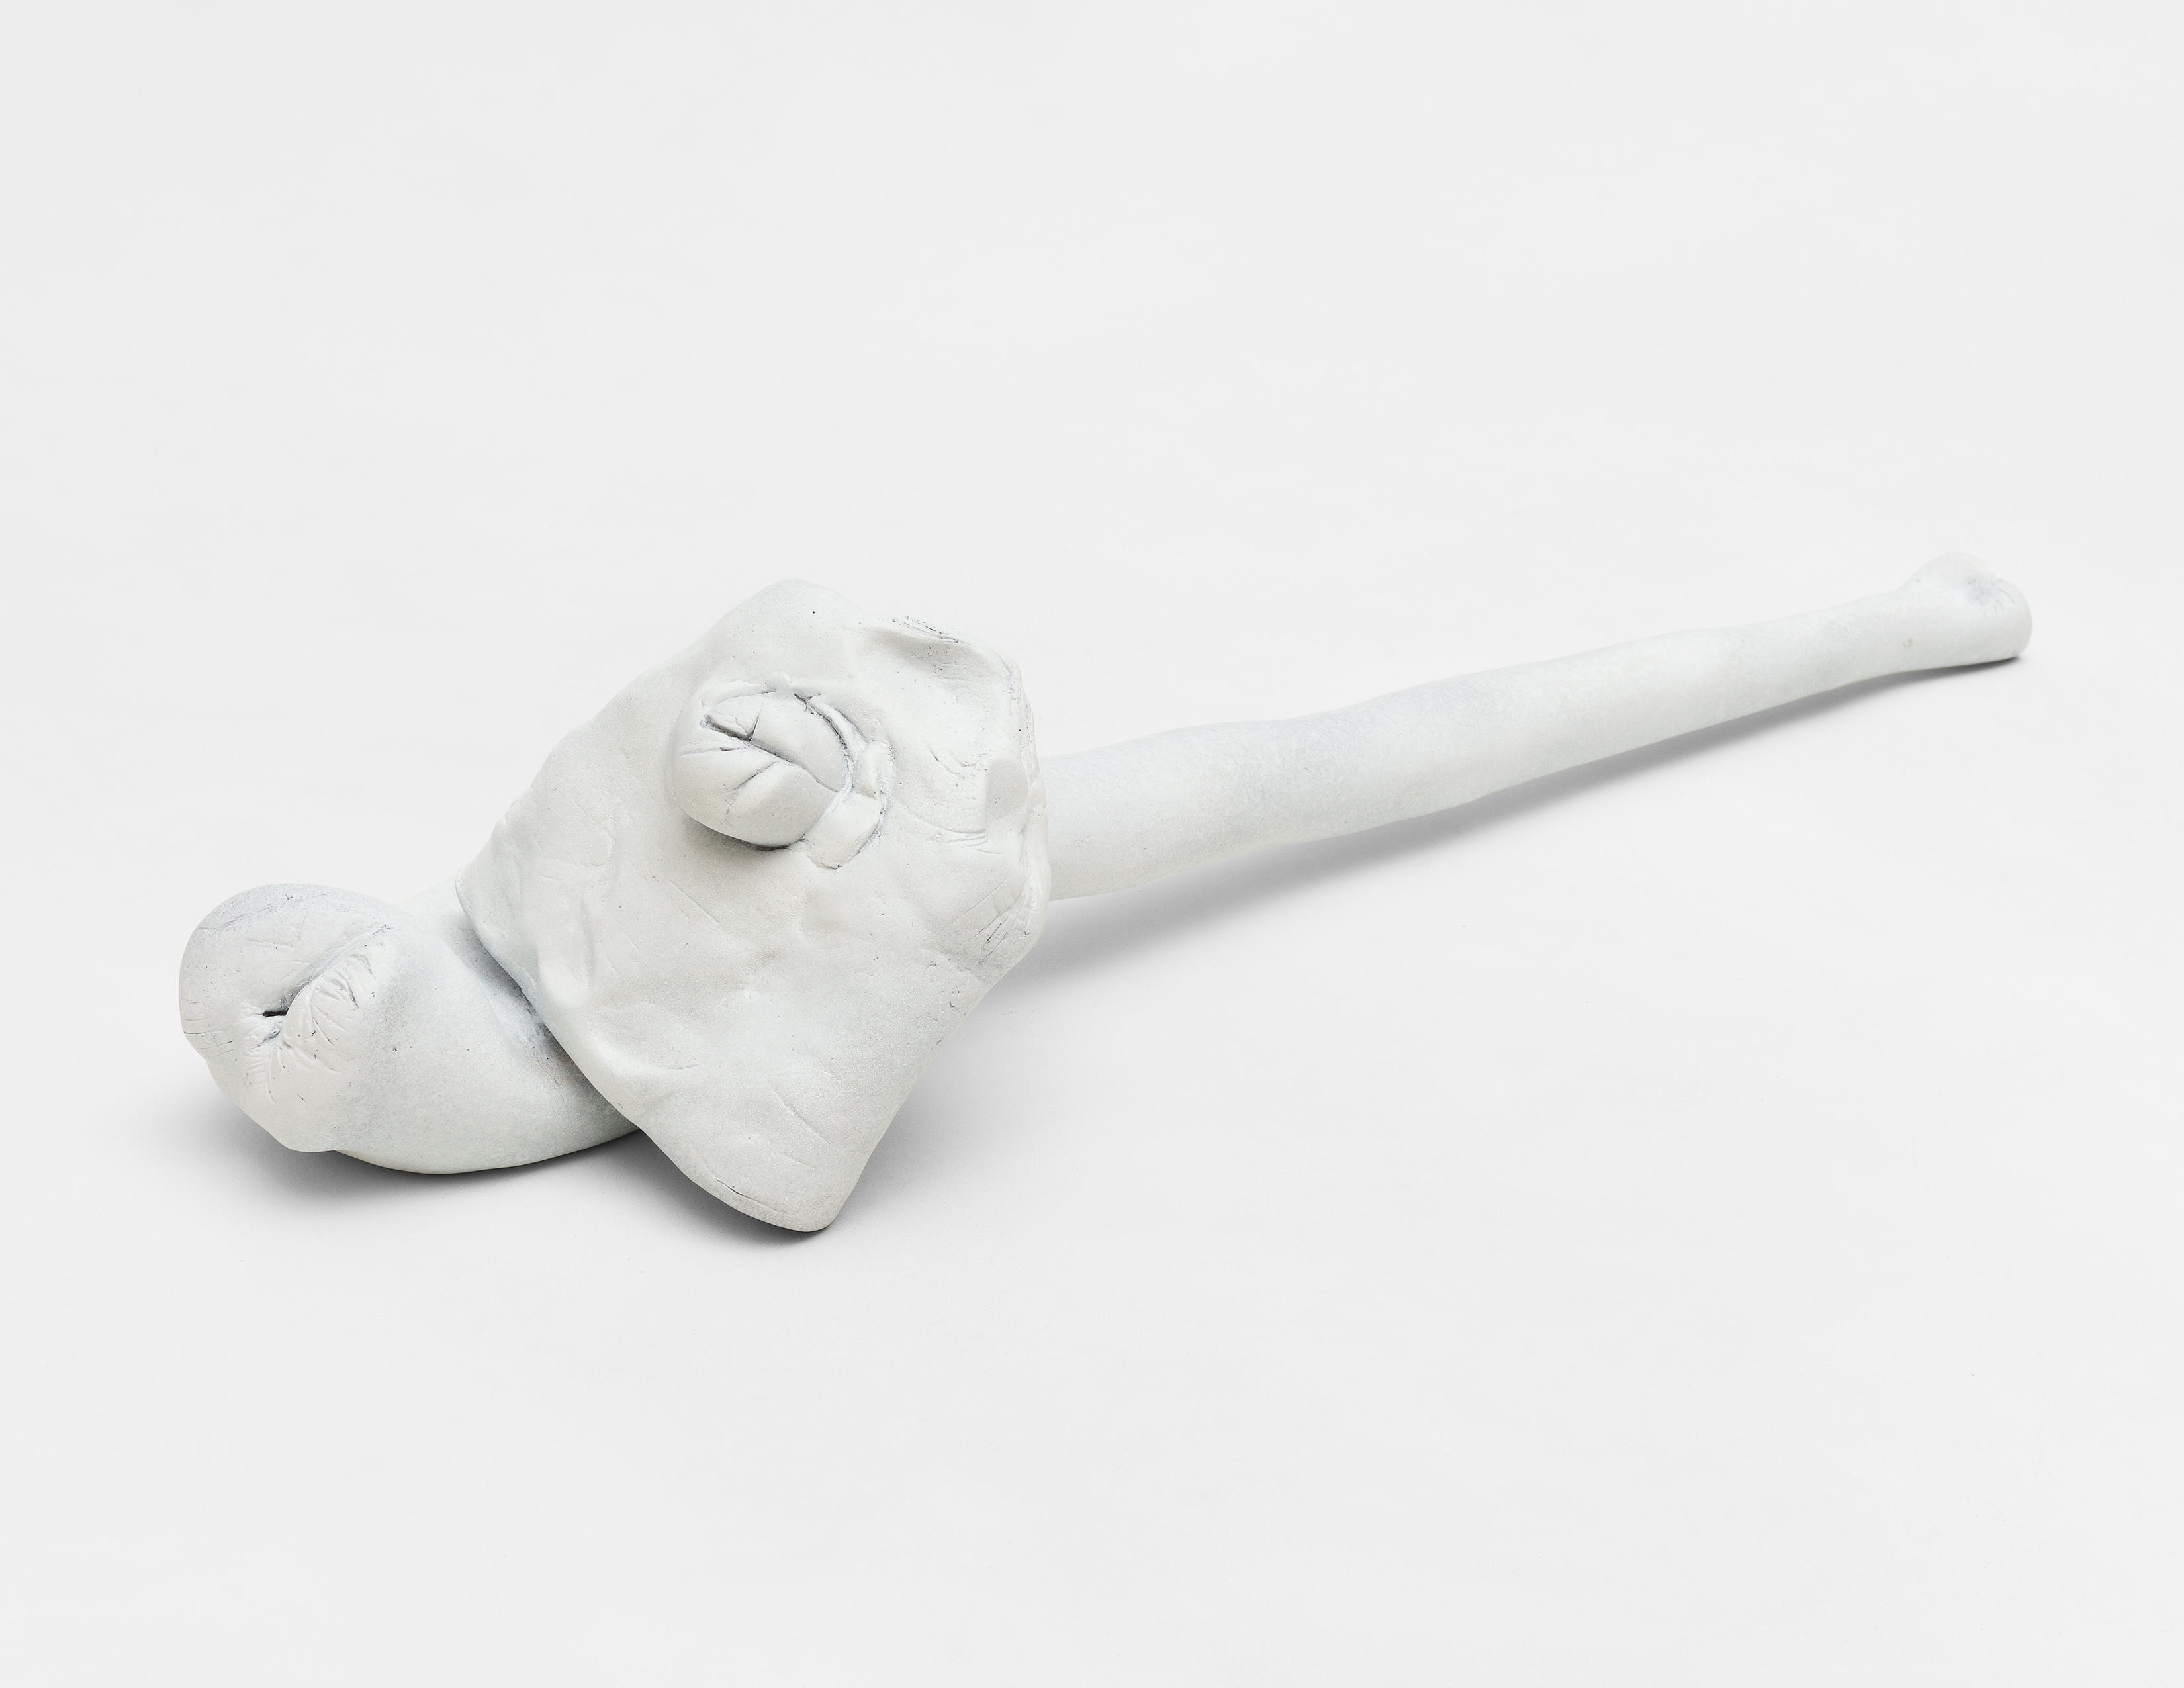 Paulo Monteiro's Untitled white patina sculpture